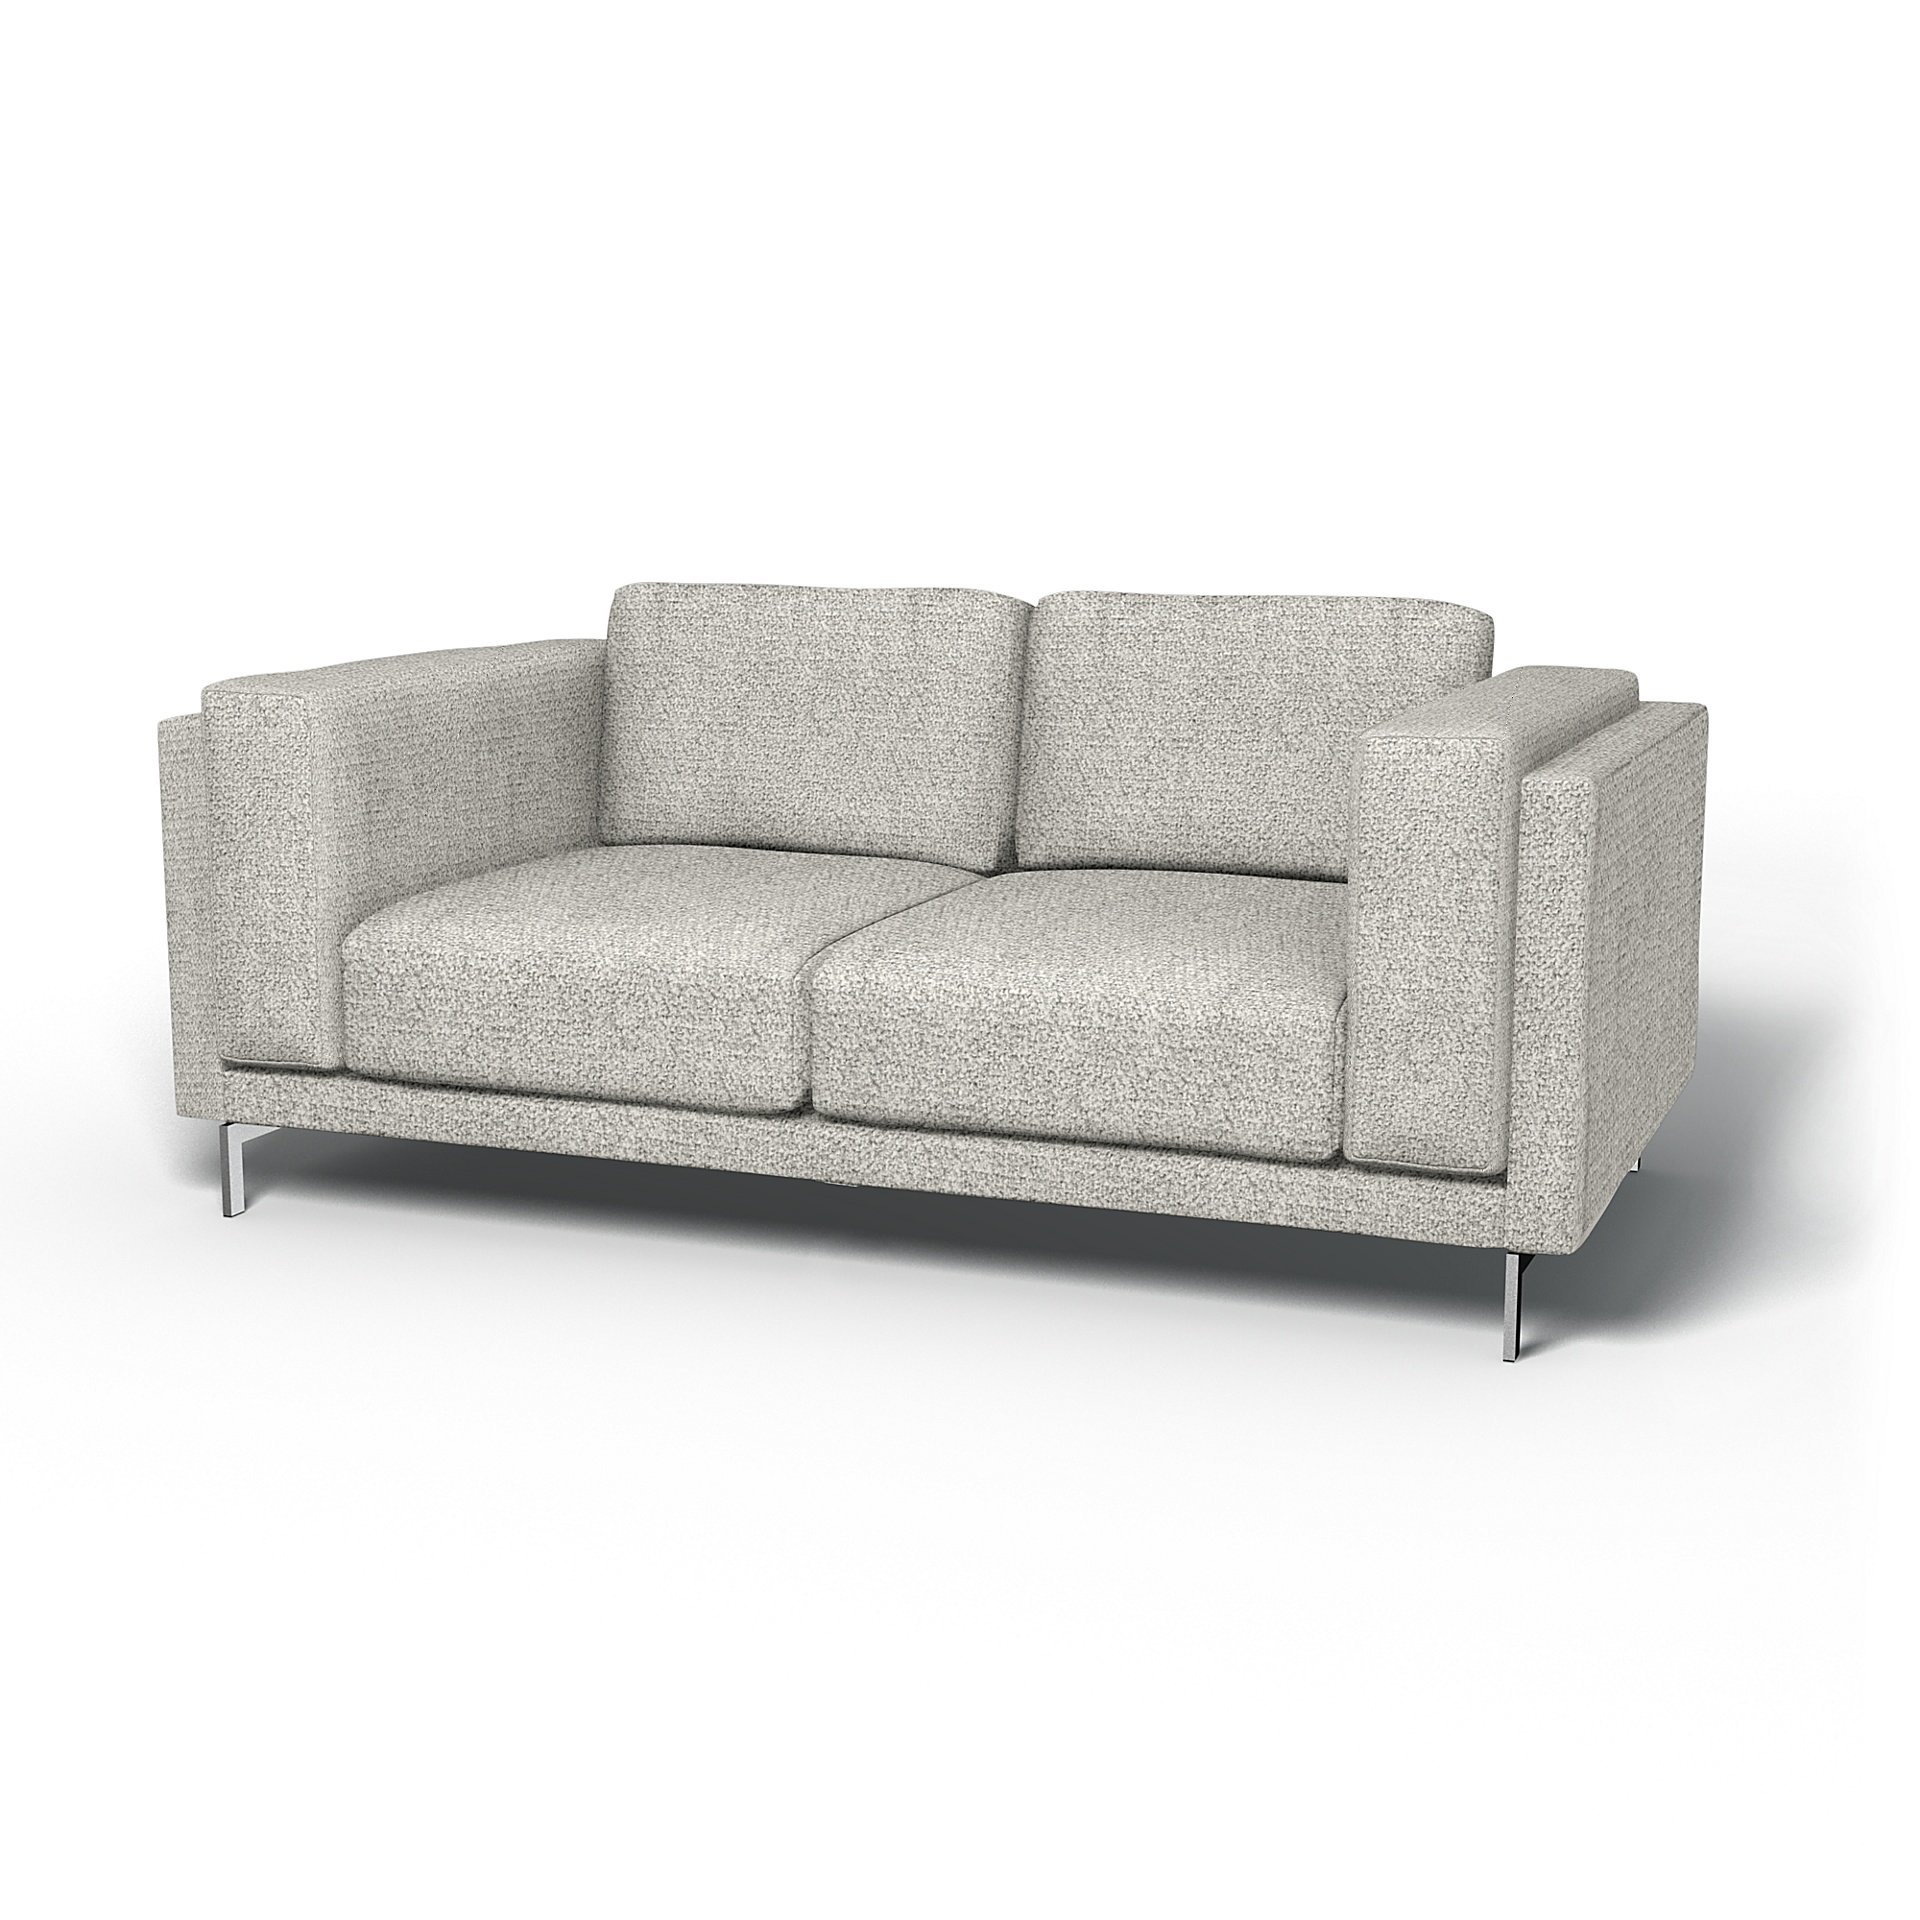 IKEA - Nockeby 2 Seater Sofa Cover, Driftwood, Boucle & Texture - Bemz